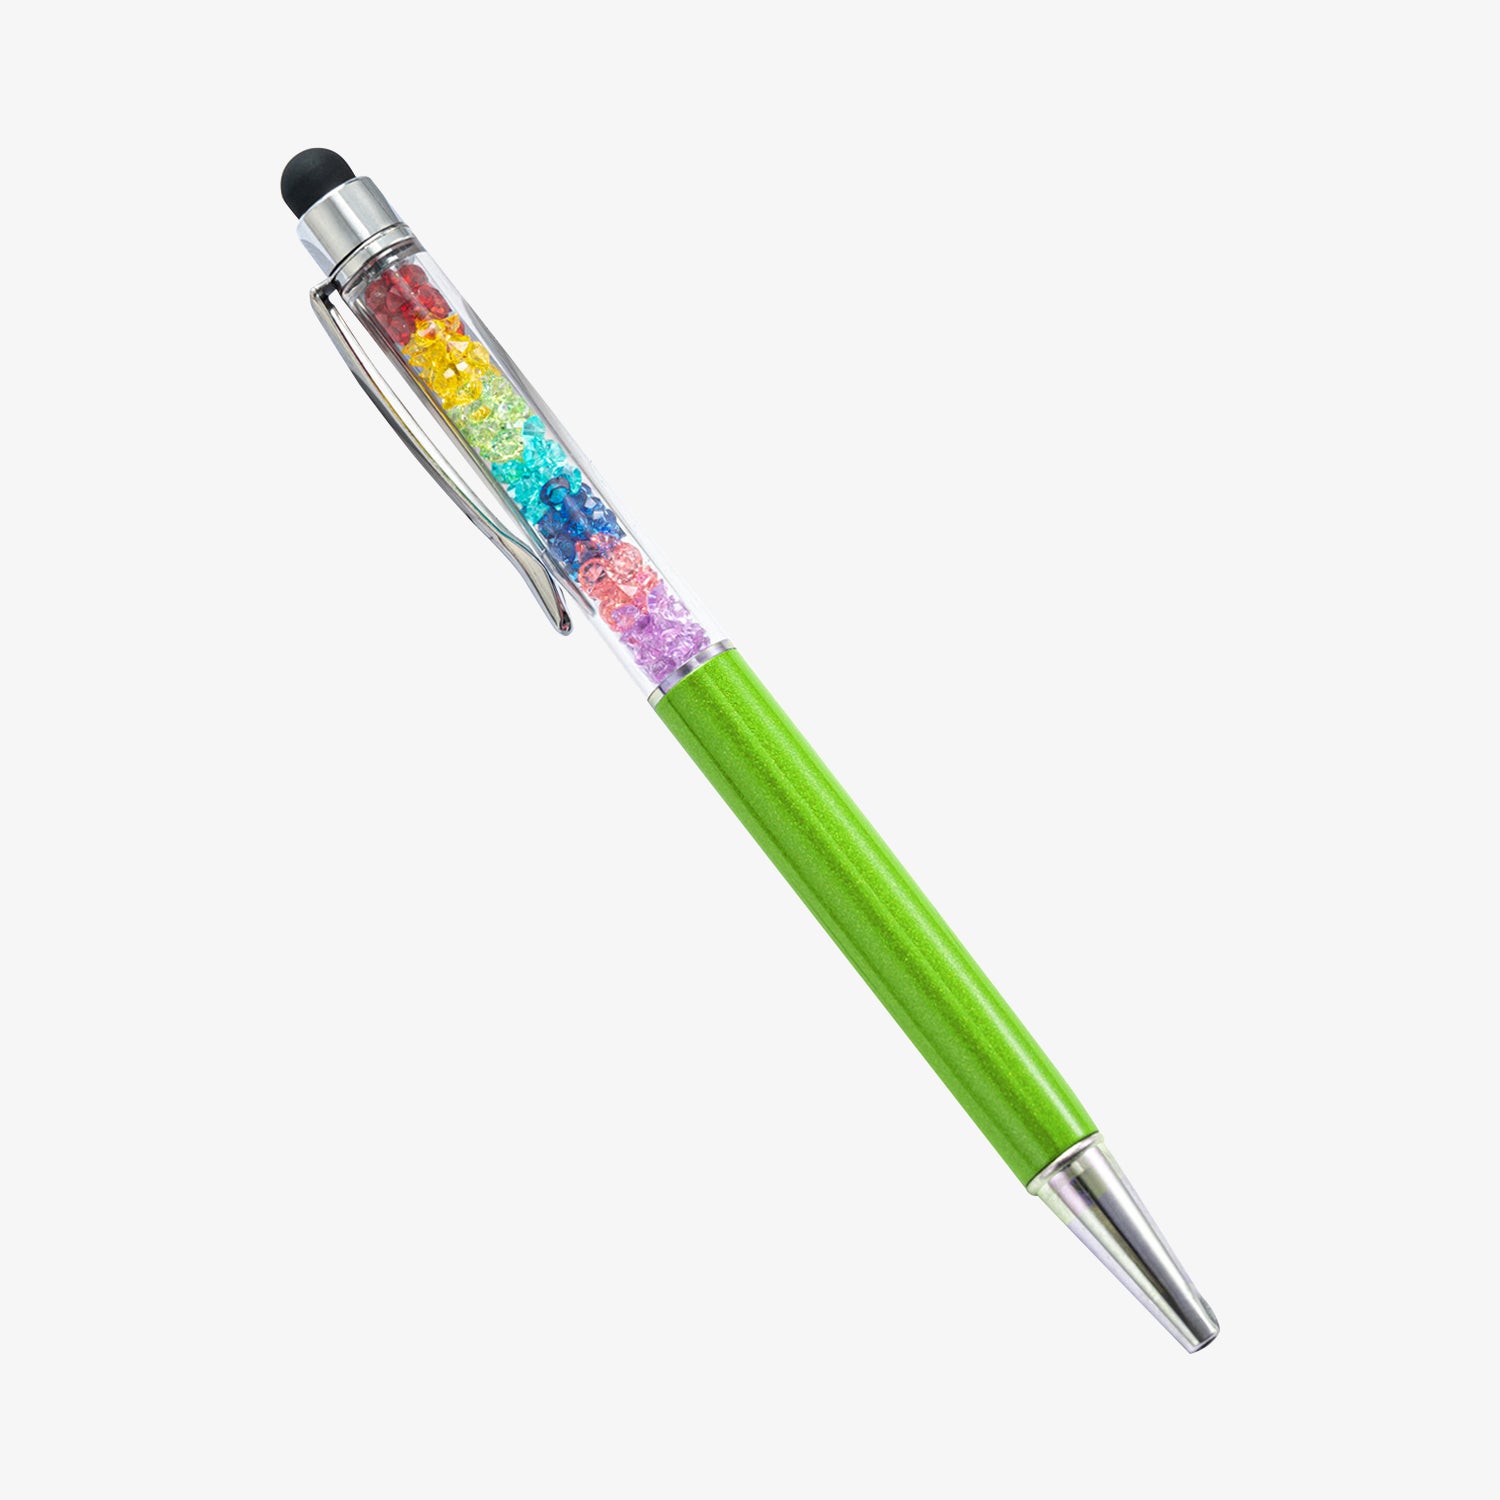 Capacitive Touch Screen Ballpoint Pen Cute Rainbow Diamond Crystal Ball Pens School Writing Supplies - Green